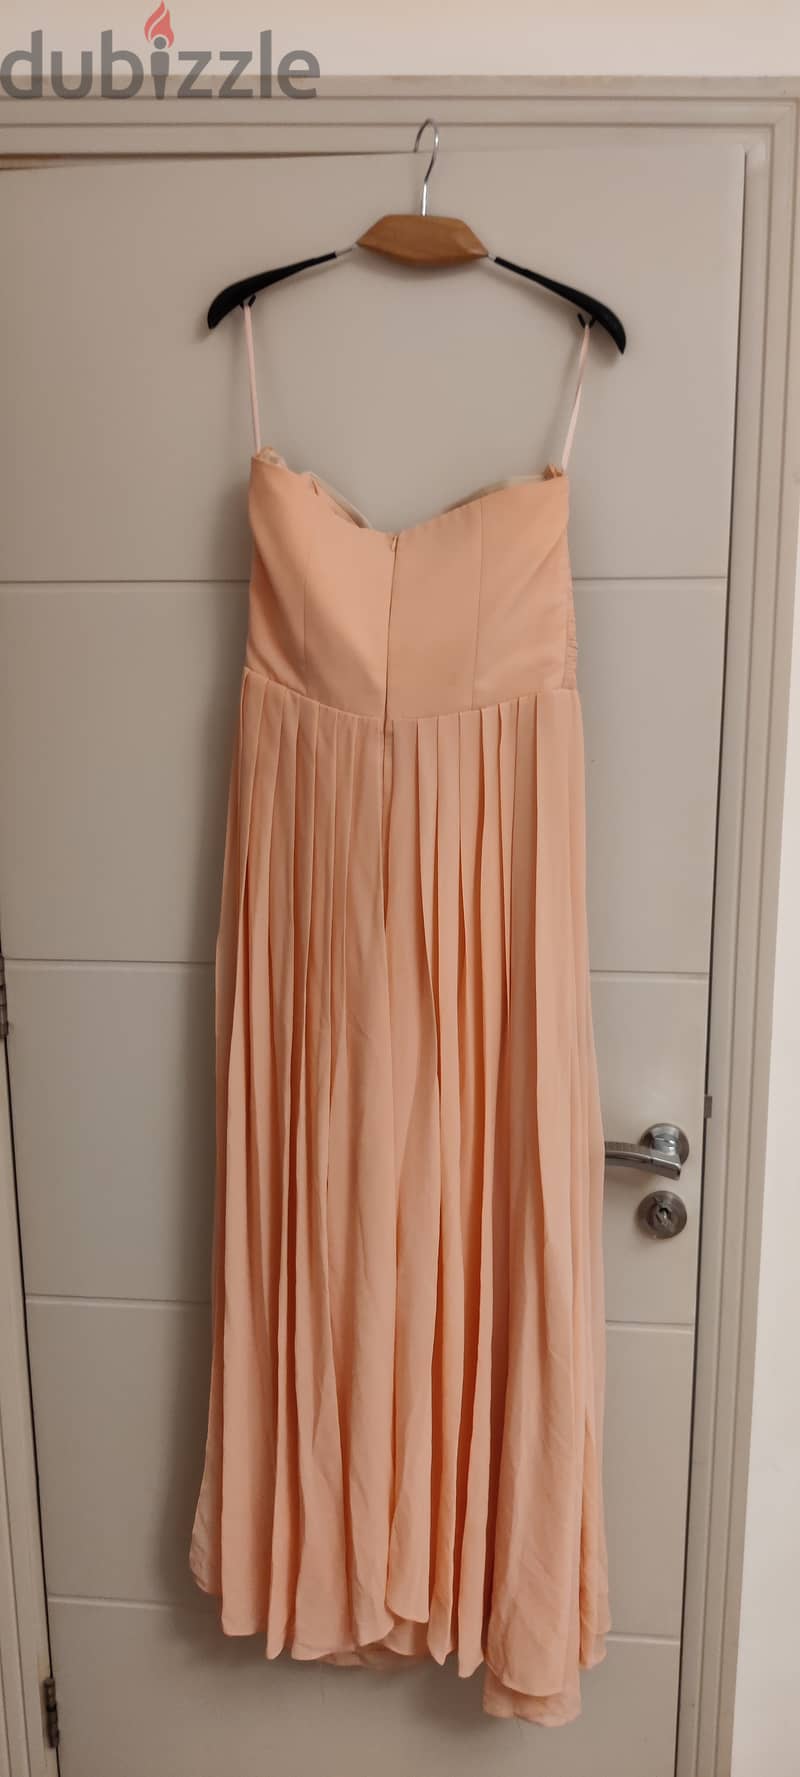 Peach colored dress Strapless silhouette 0